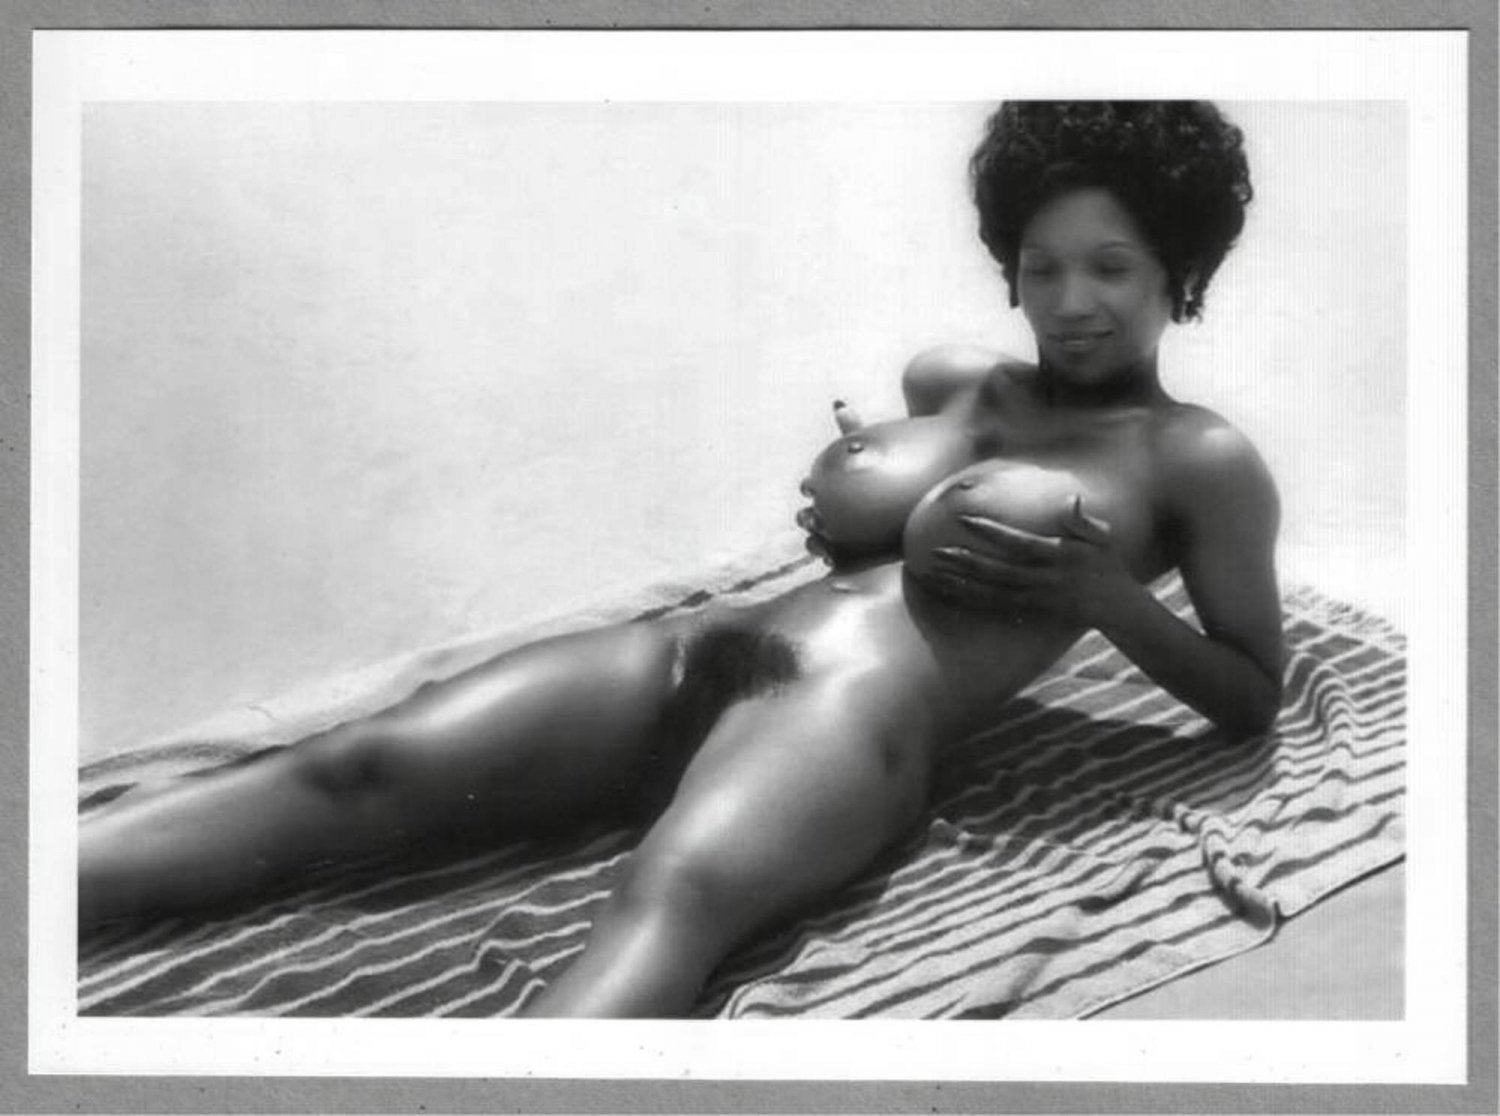 Ebony sylvia mcfarland topless nude huge breasts hairy pussy new reprint 5X...